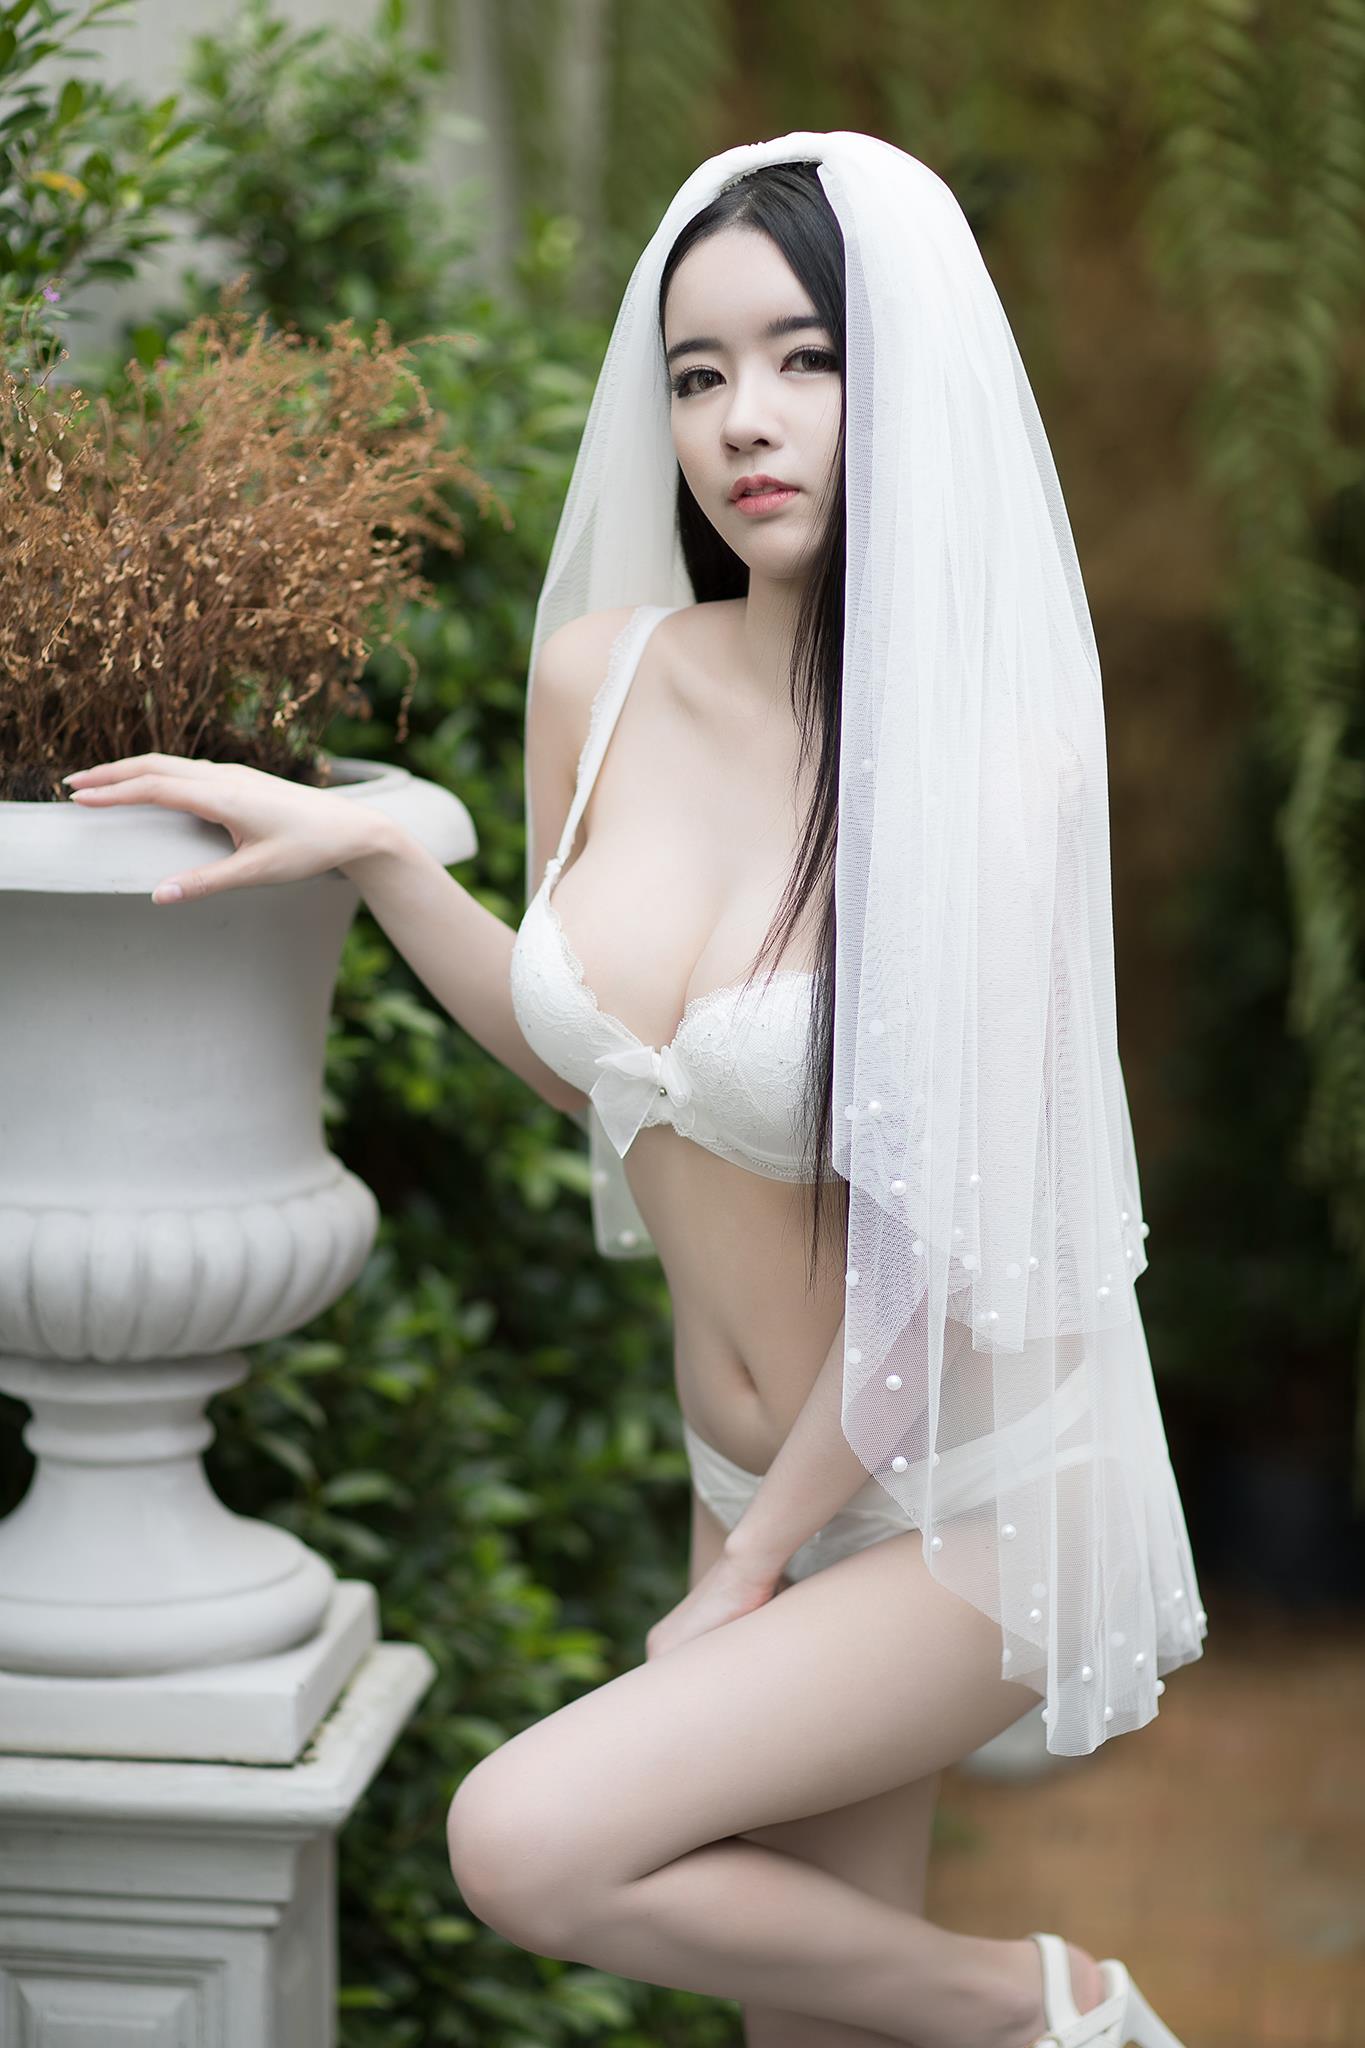 hot & pure lingerie wearing Asian girl